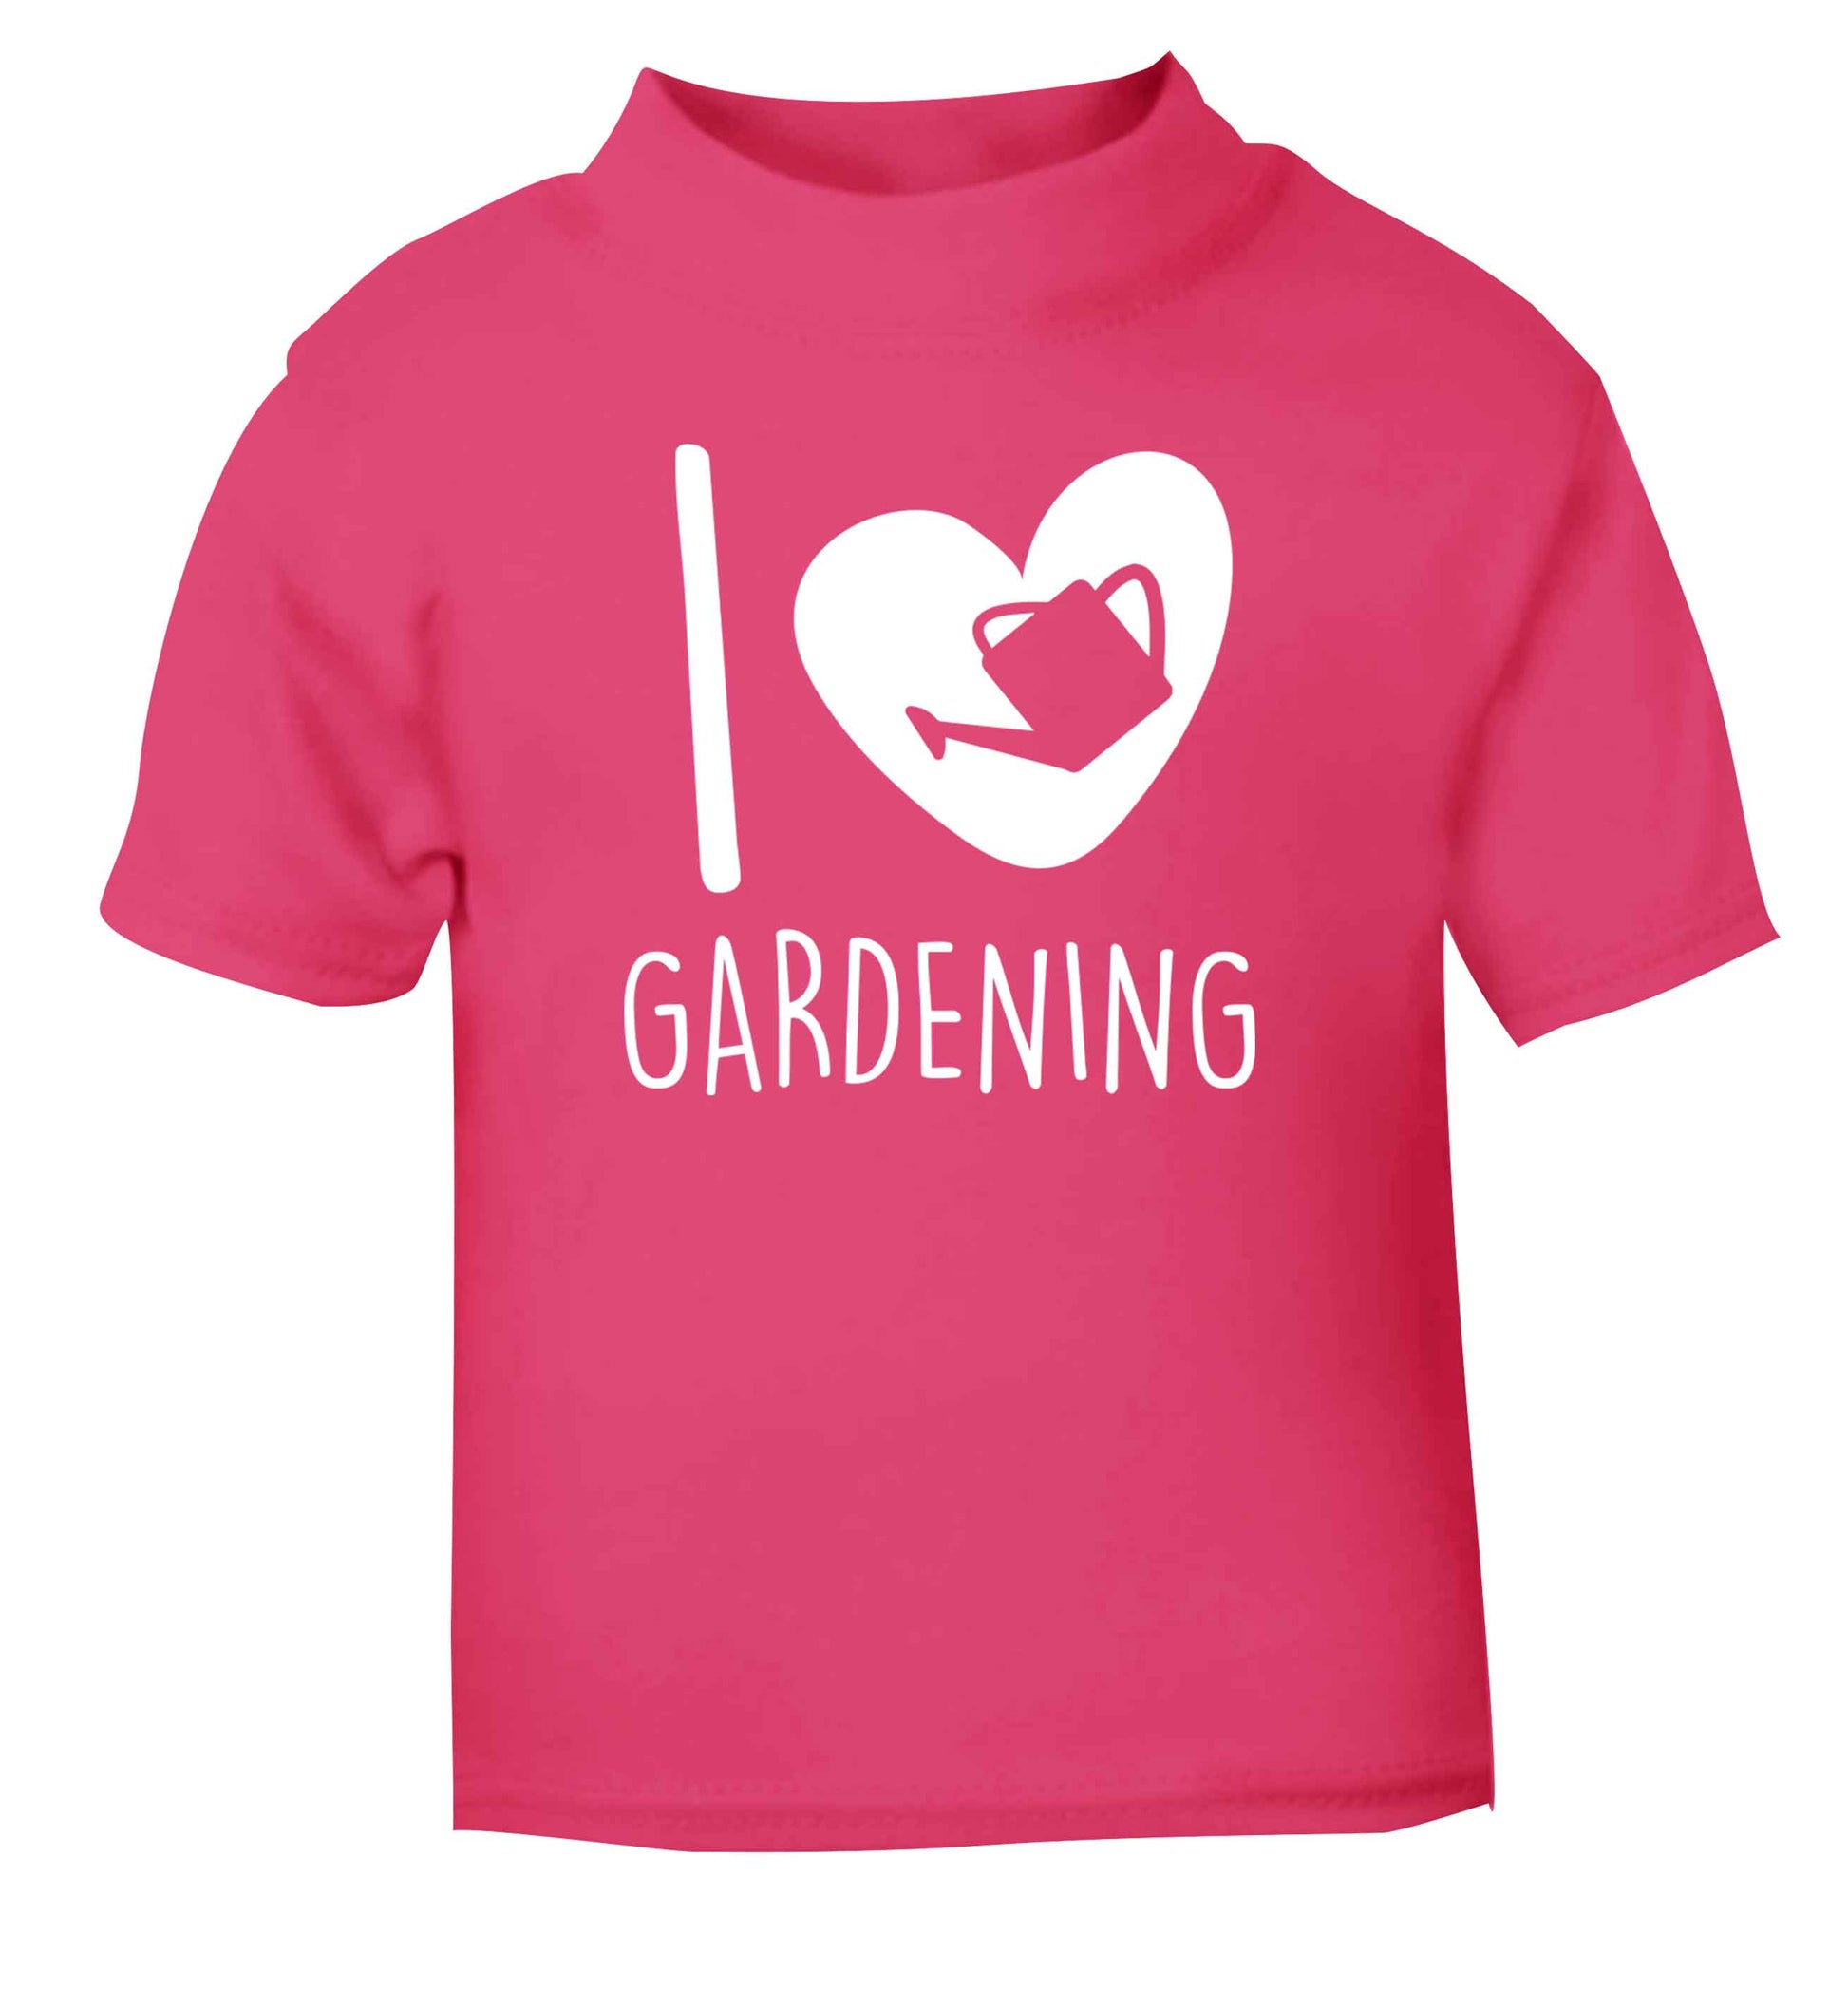 I love gardening pink Baby Toddler Tshirt 2 Years